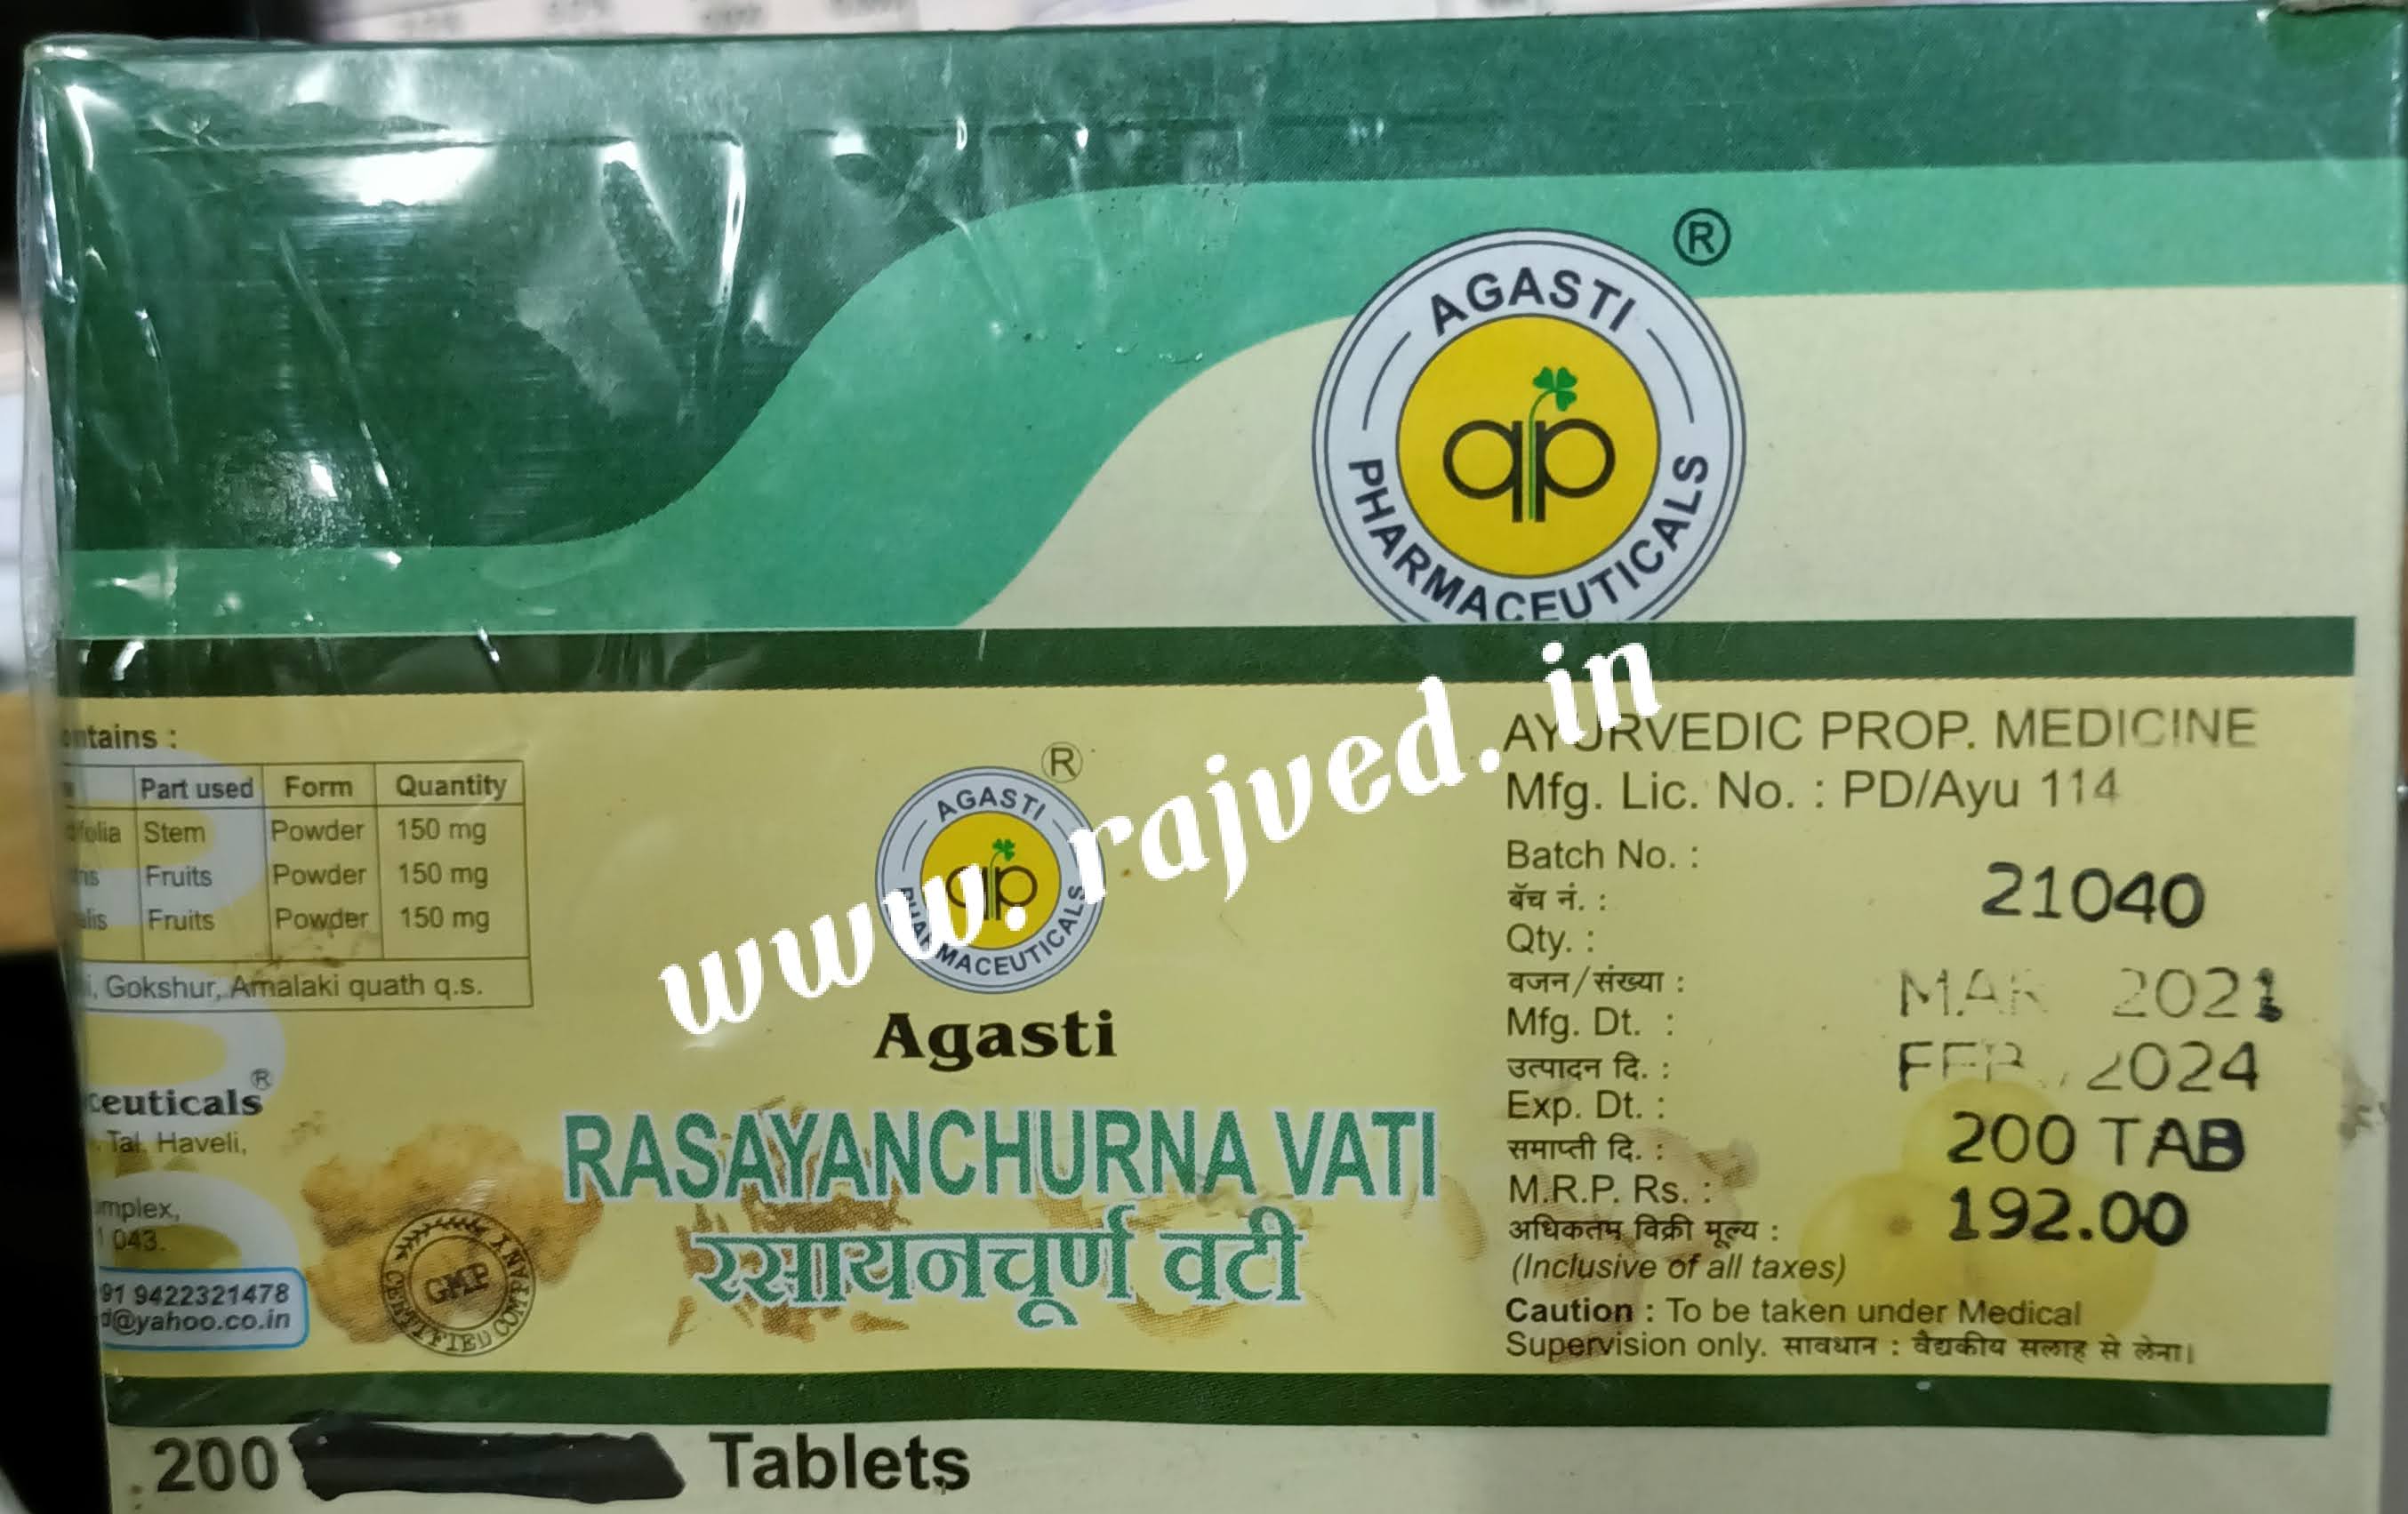 rasayan churna vati tablets 500tabs upto 15% off agasti pharmaceuticals